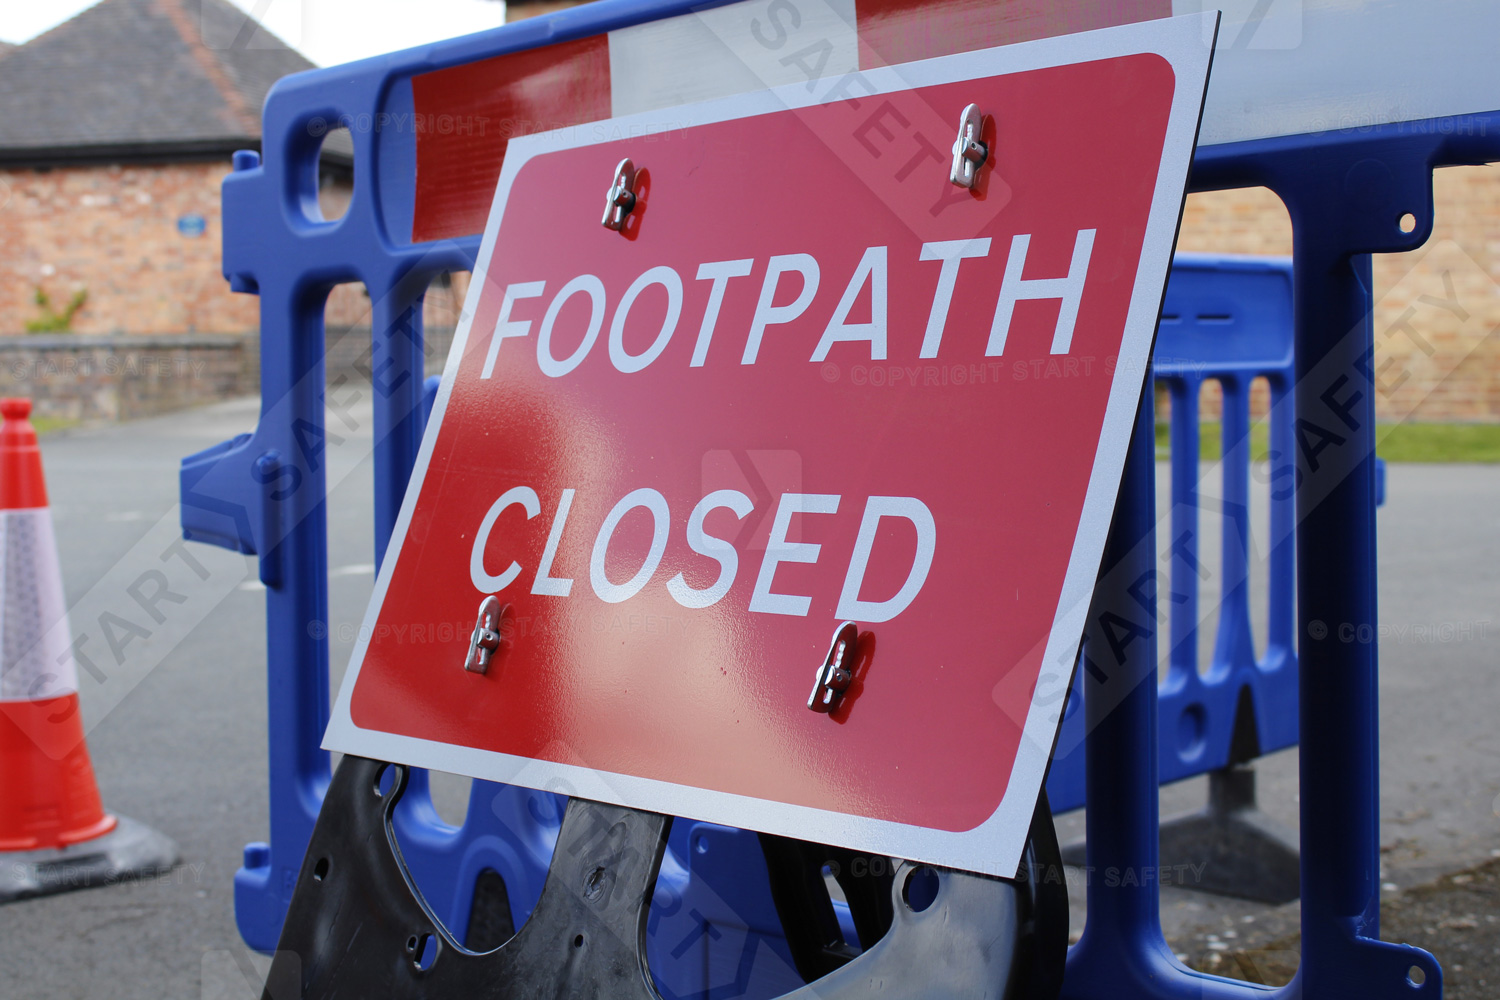 Footpath Closed Endurasign In Use